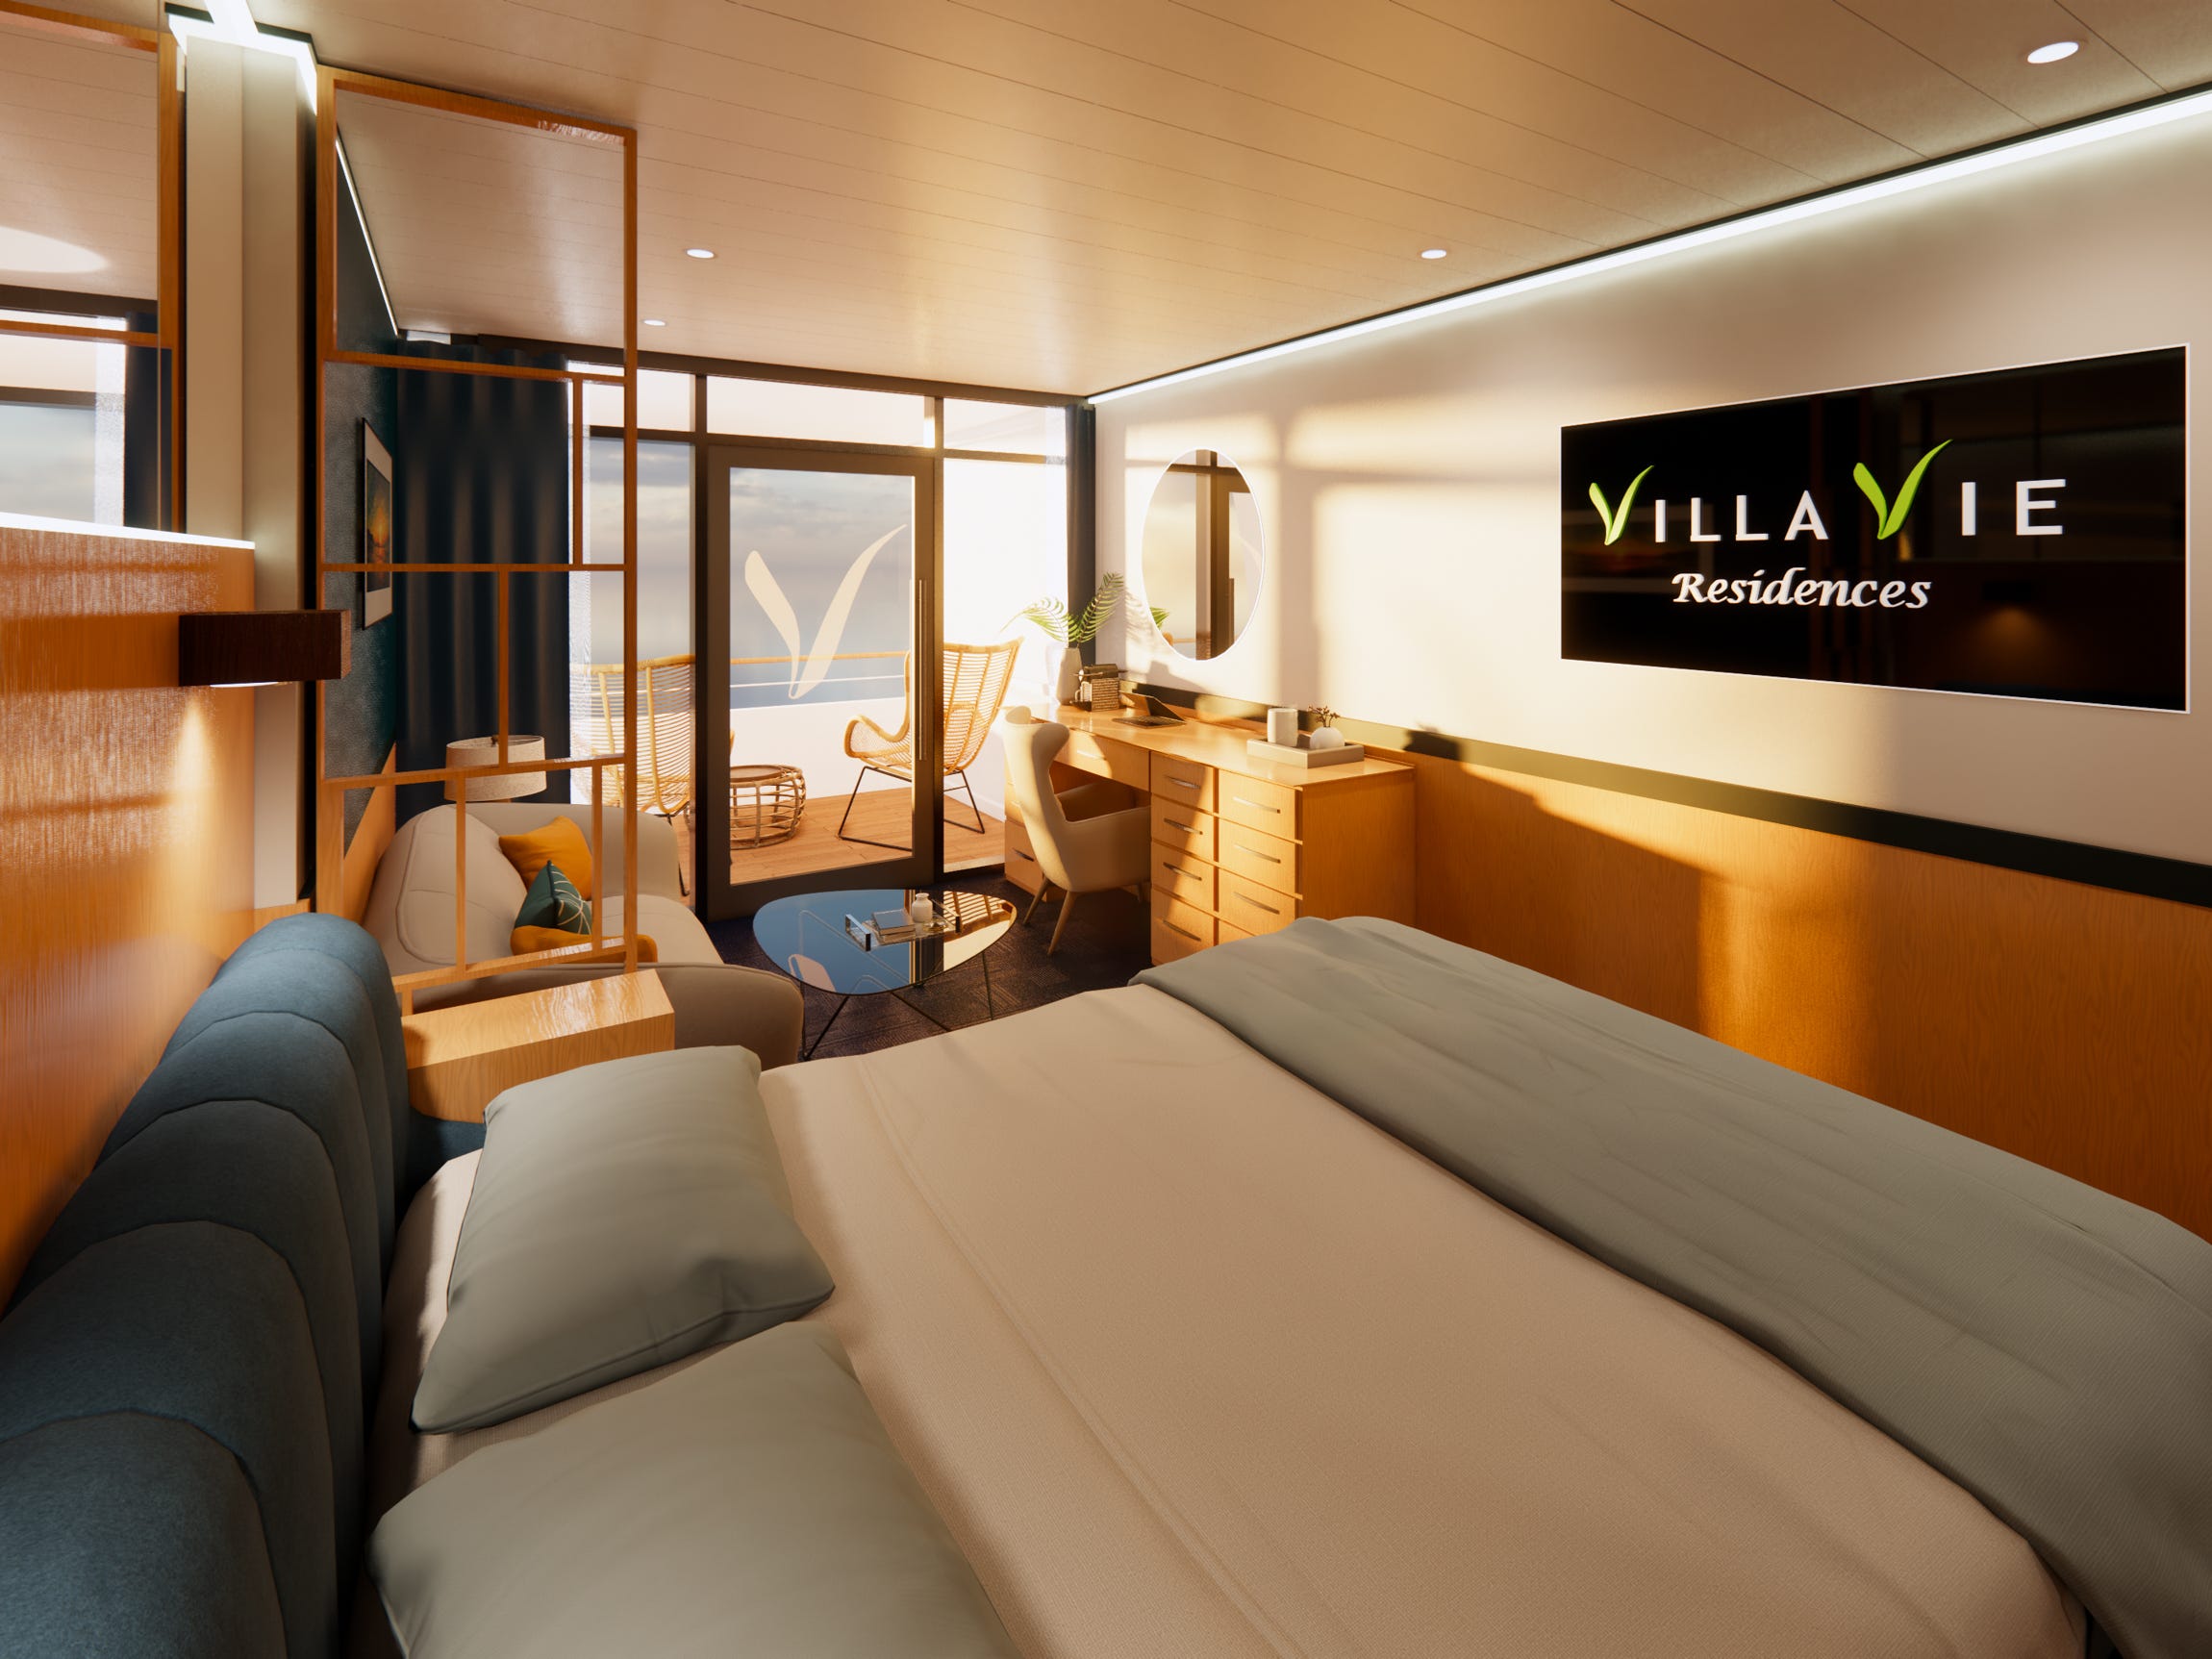 A balcony cabin rendering on Villa Vie's upcoming cruise ship 